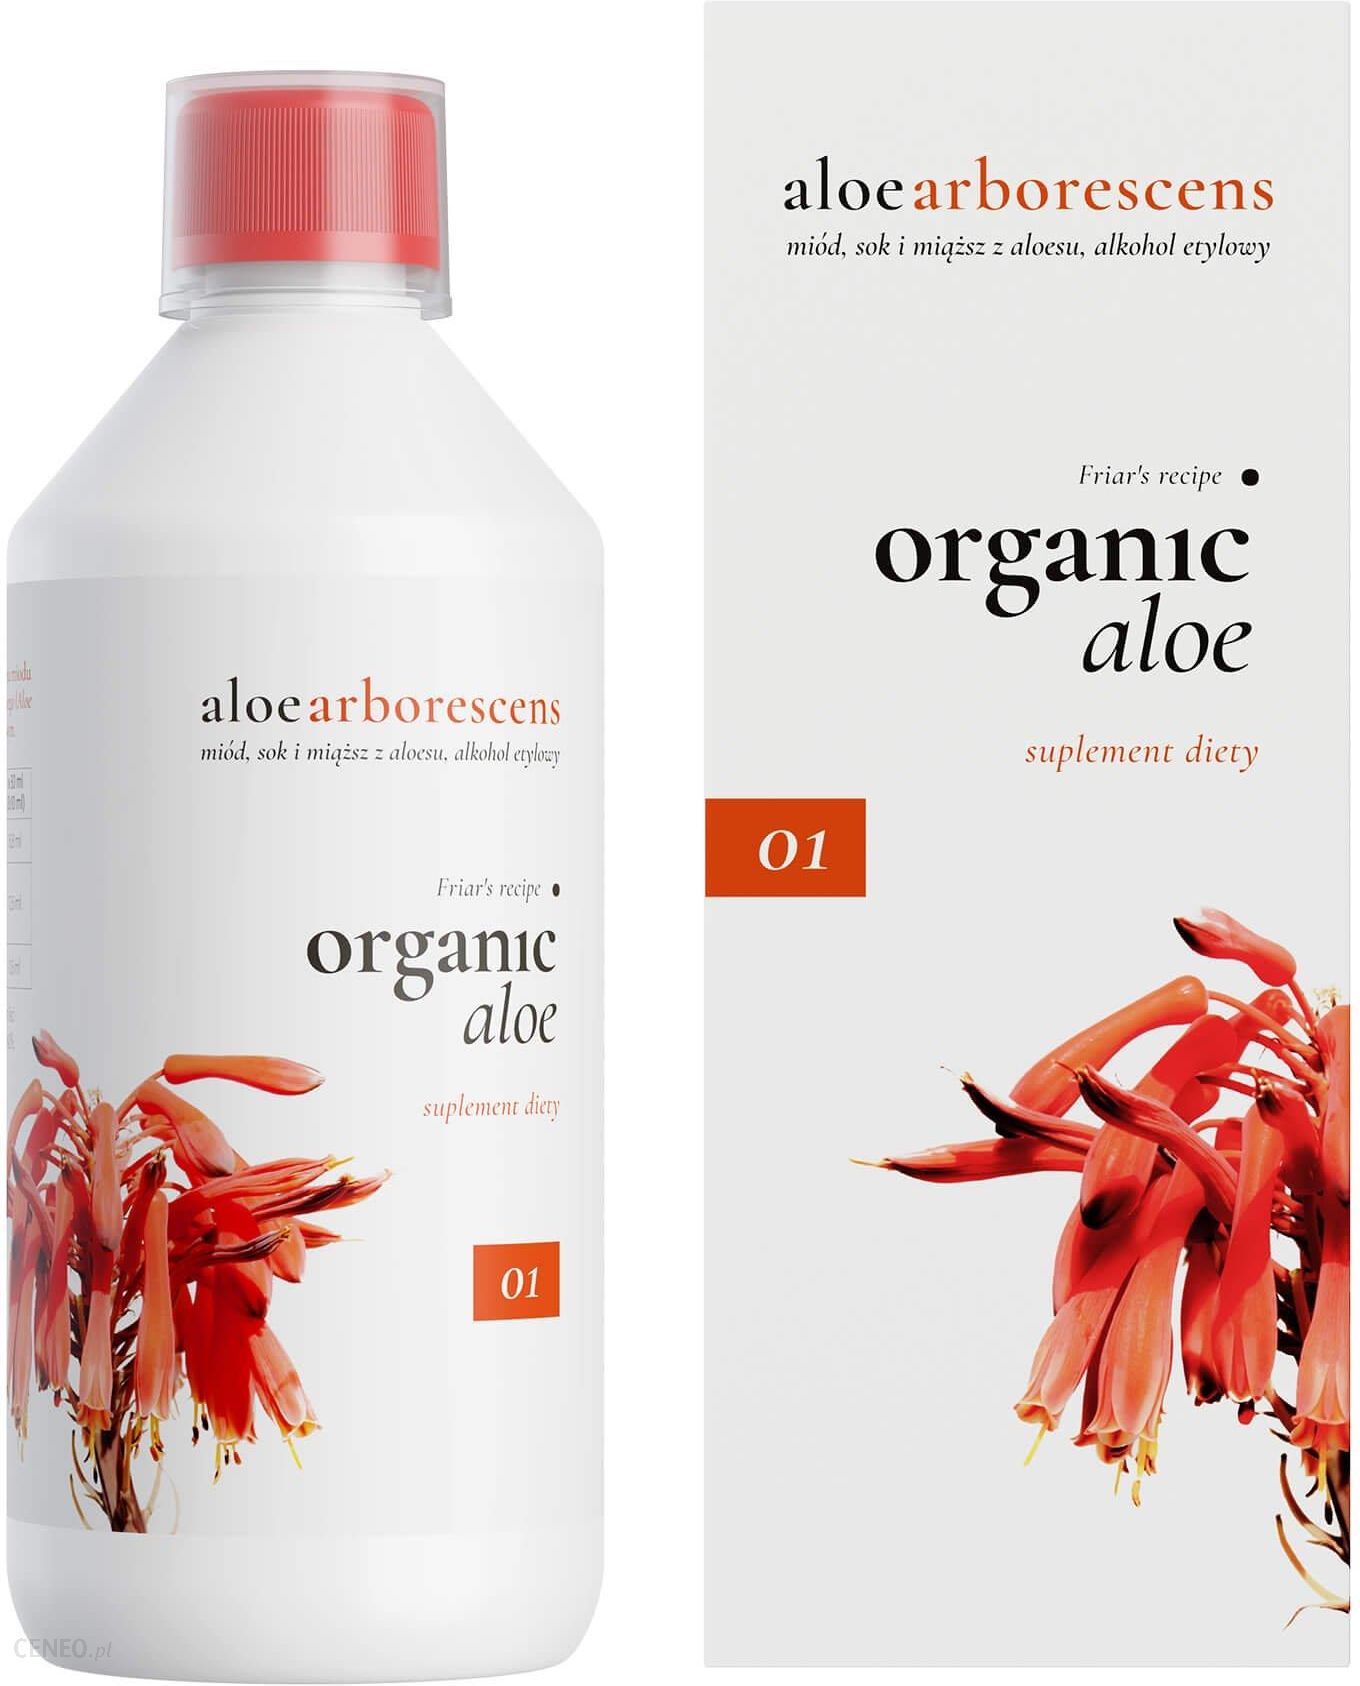 Organic Life Aloe Arborescens 01 Aloes Drzewiasty 500ml Przepis Mnicha